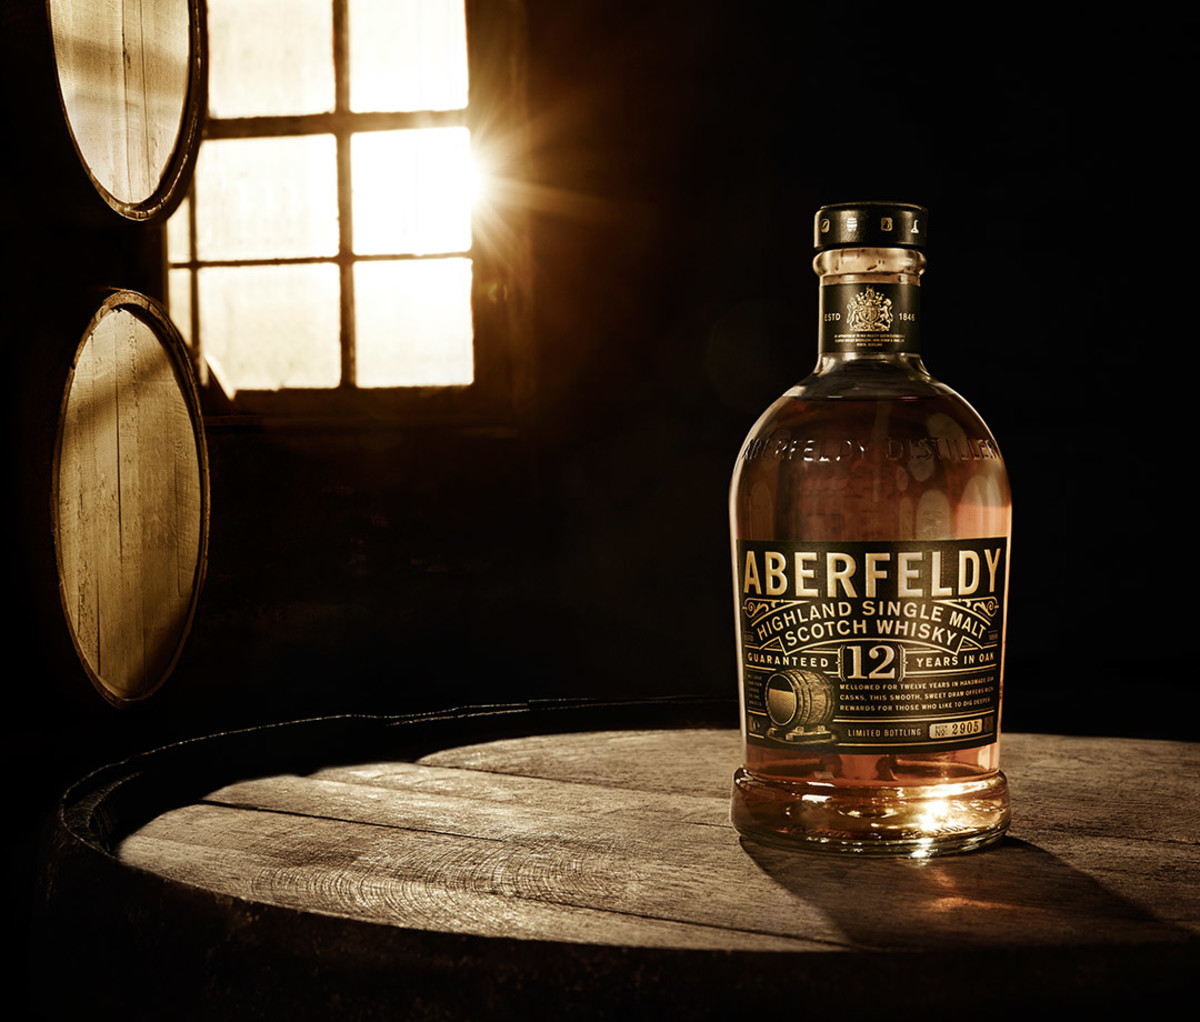 Aberfeldy 16 Year, a single-malt Scotch whisky